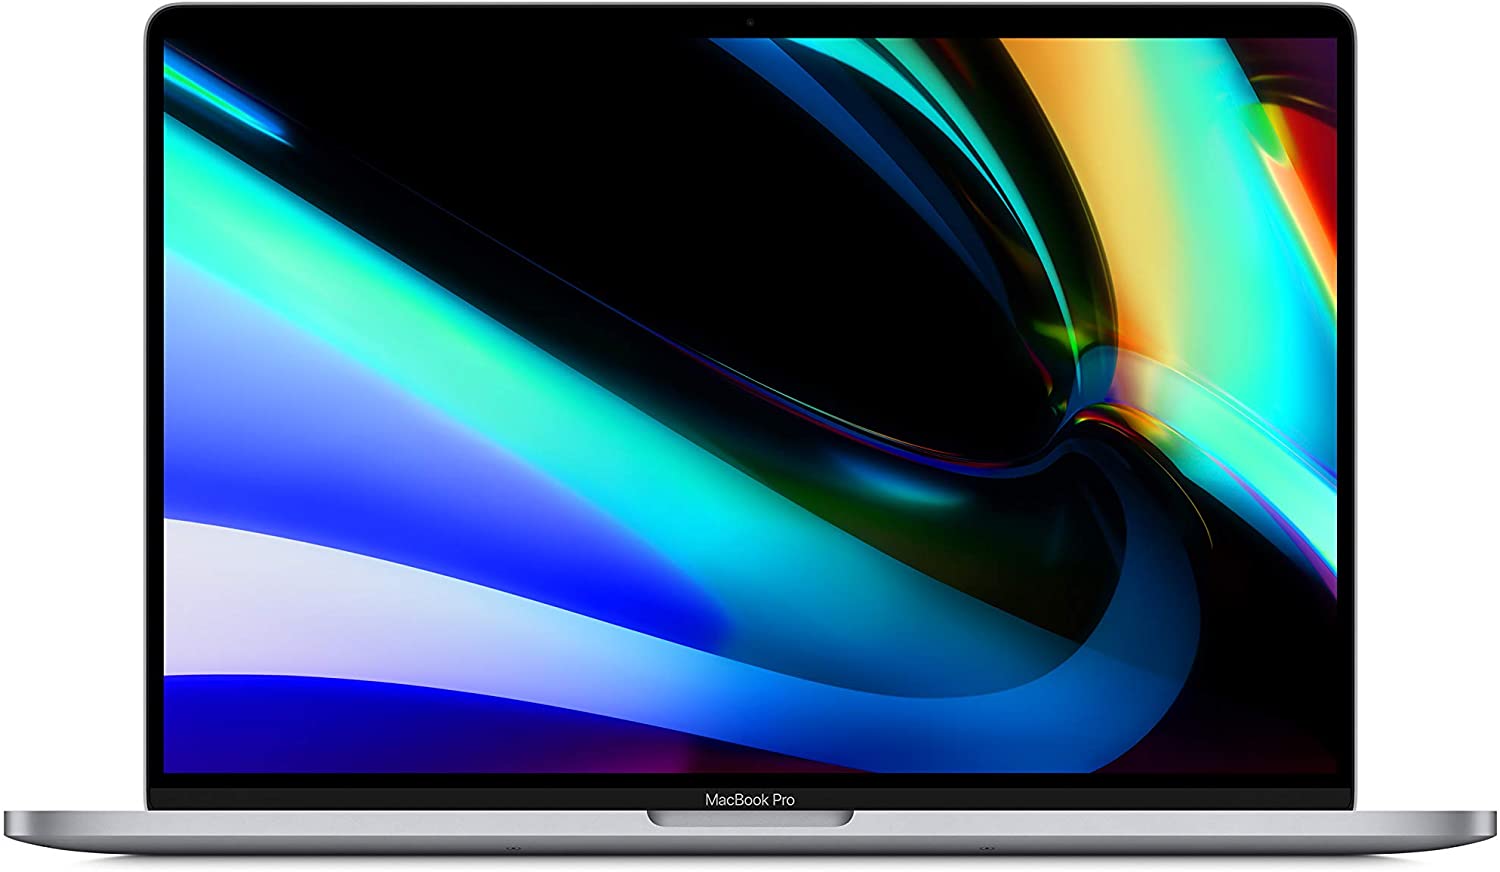 Apple MacBook Pro MVVK2 2019 Laptop | Intel Core i9 2.3GHz, 16GB 